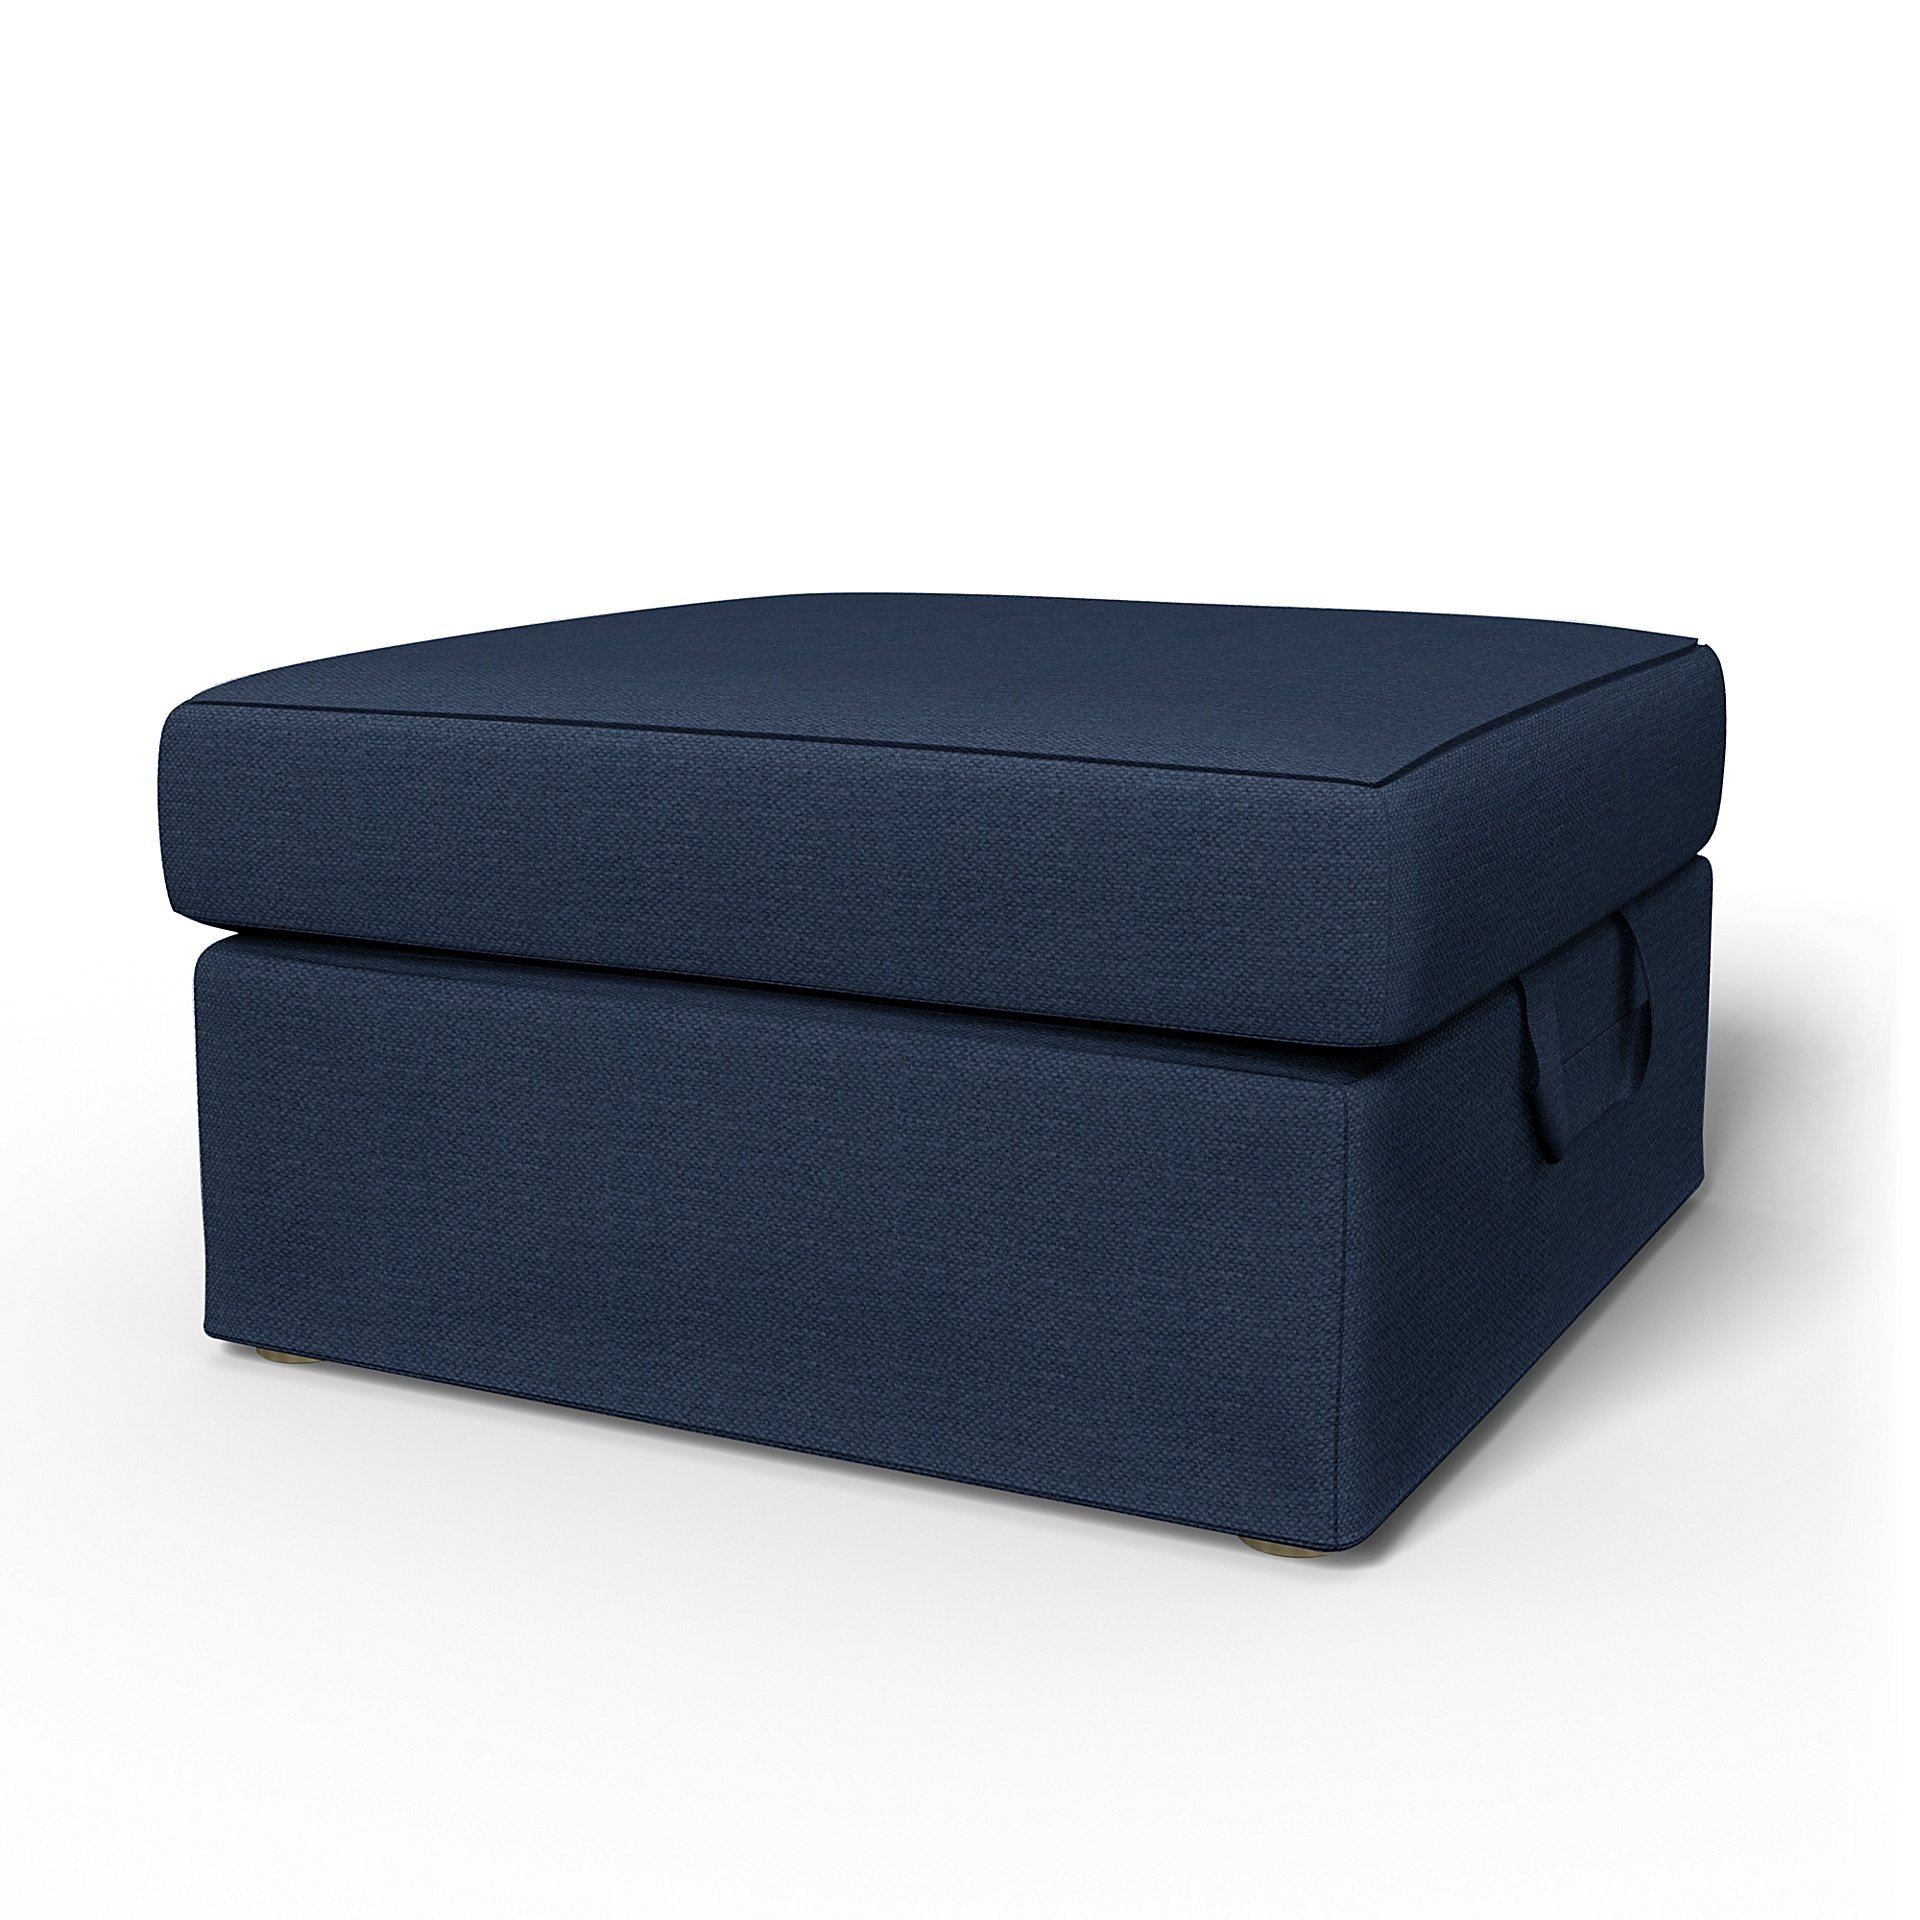 IKEA - Tomelilla Foto Footstool Cover, Navy Blue, Linen - Bemz